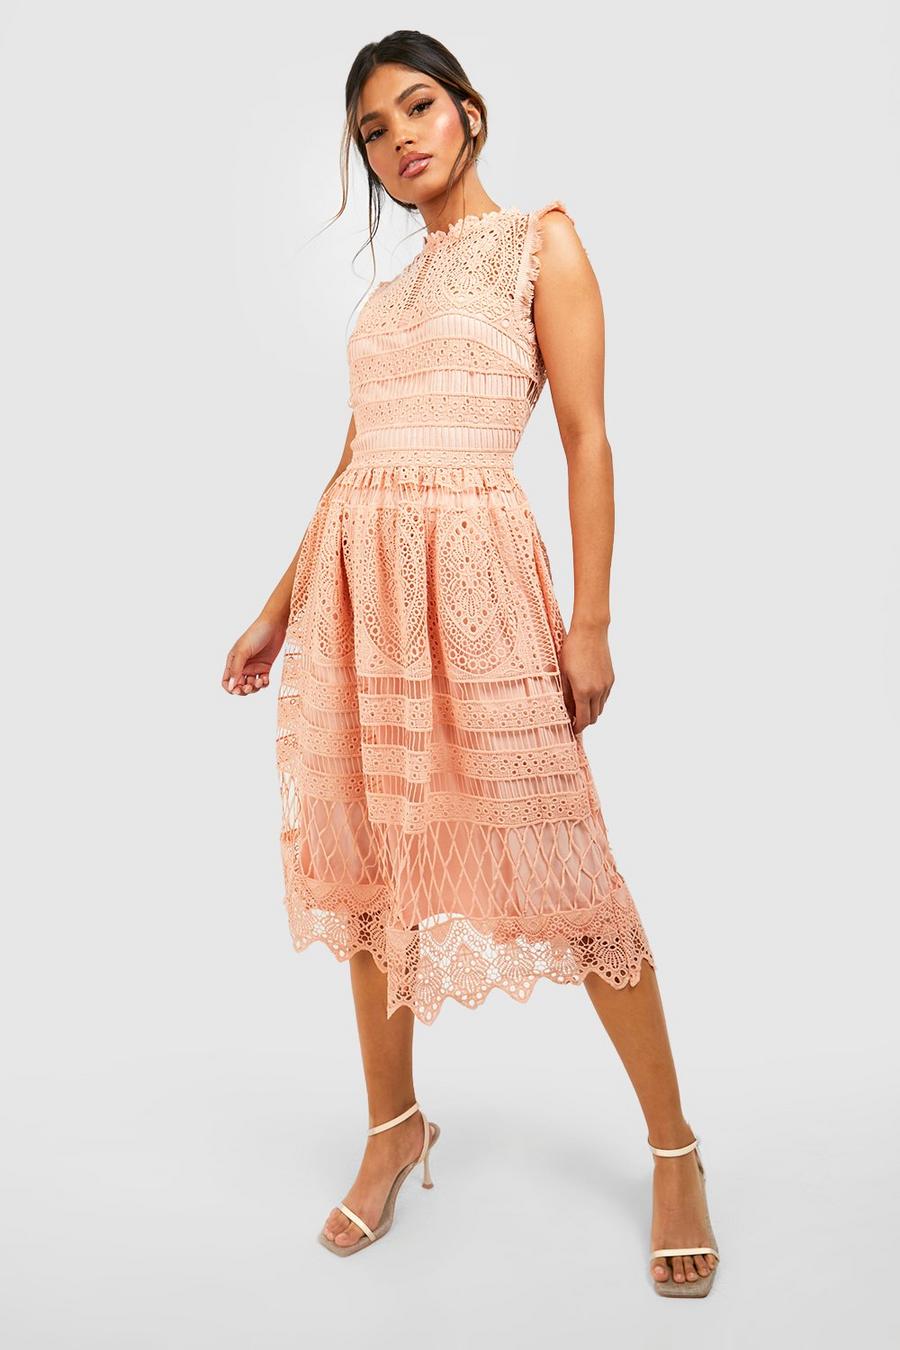 Blush pink Boutique Lace Skater Bridesmaid Dress